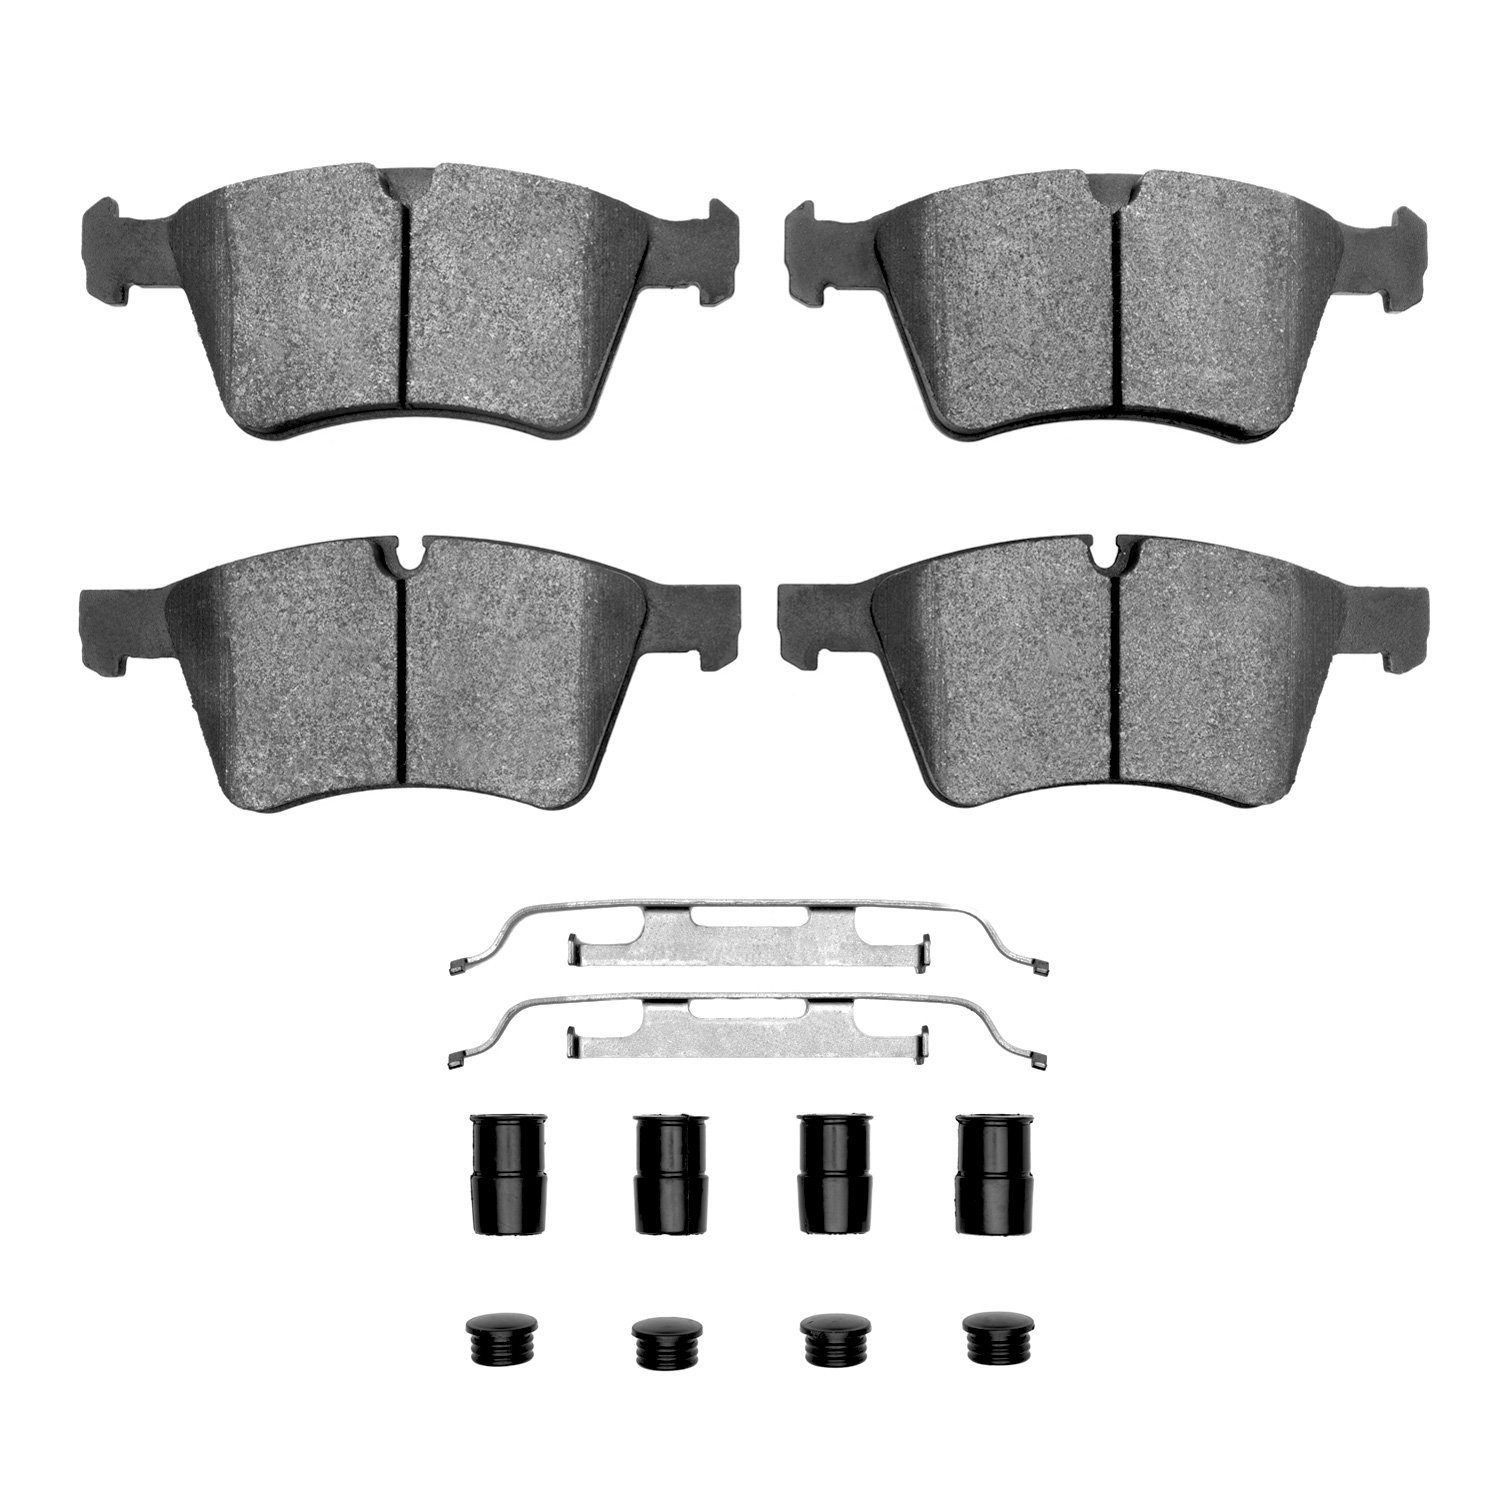 1551-1272-01 5000 Advanced Low-Metallic Brake Pads & Hardware Kit, 2007-2009 Mercedes-Benz, Position: Front